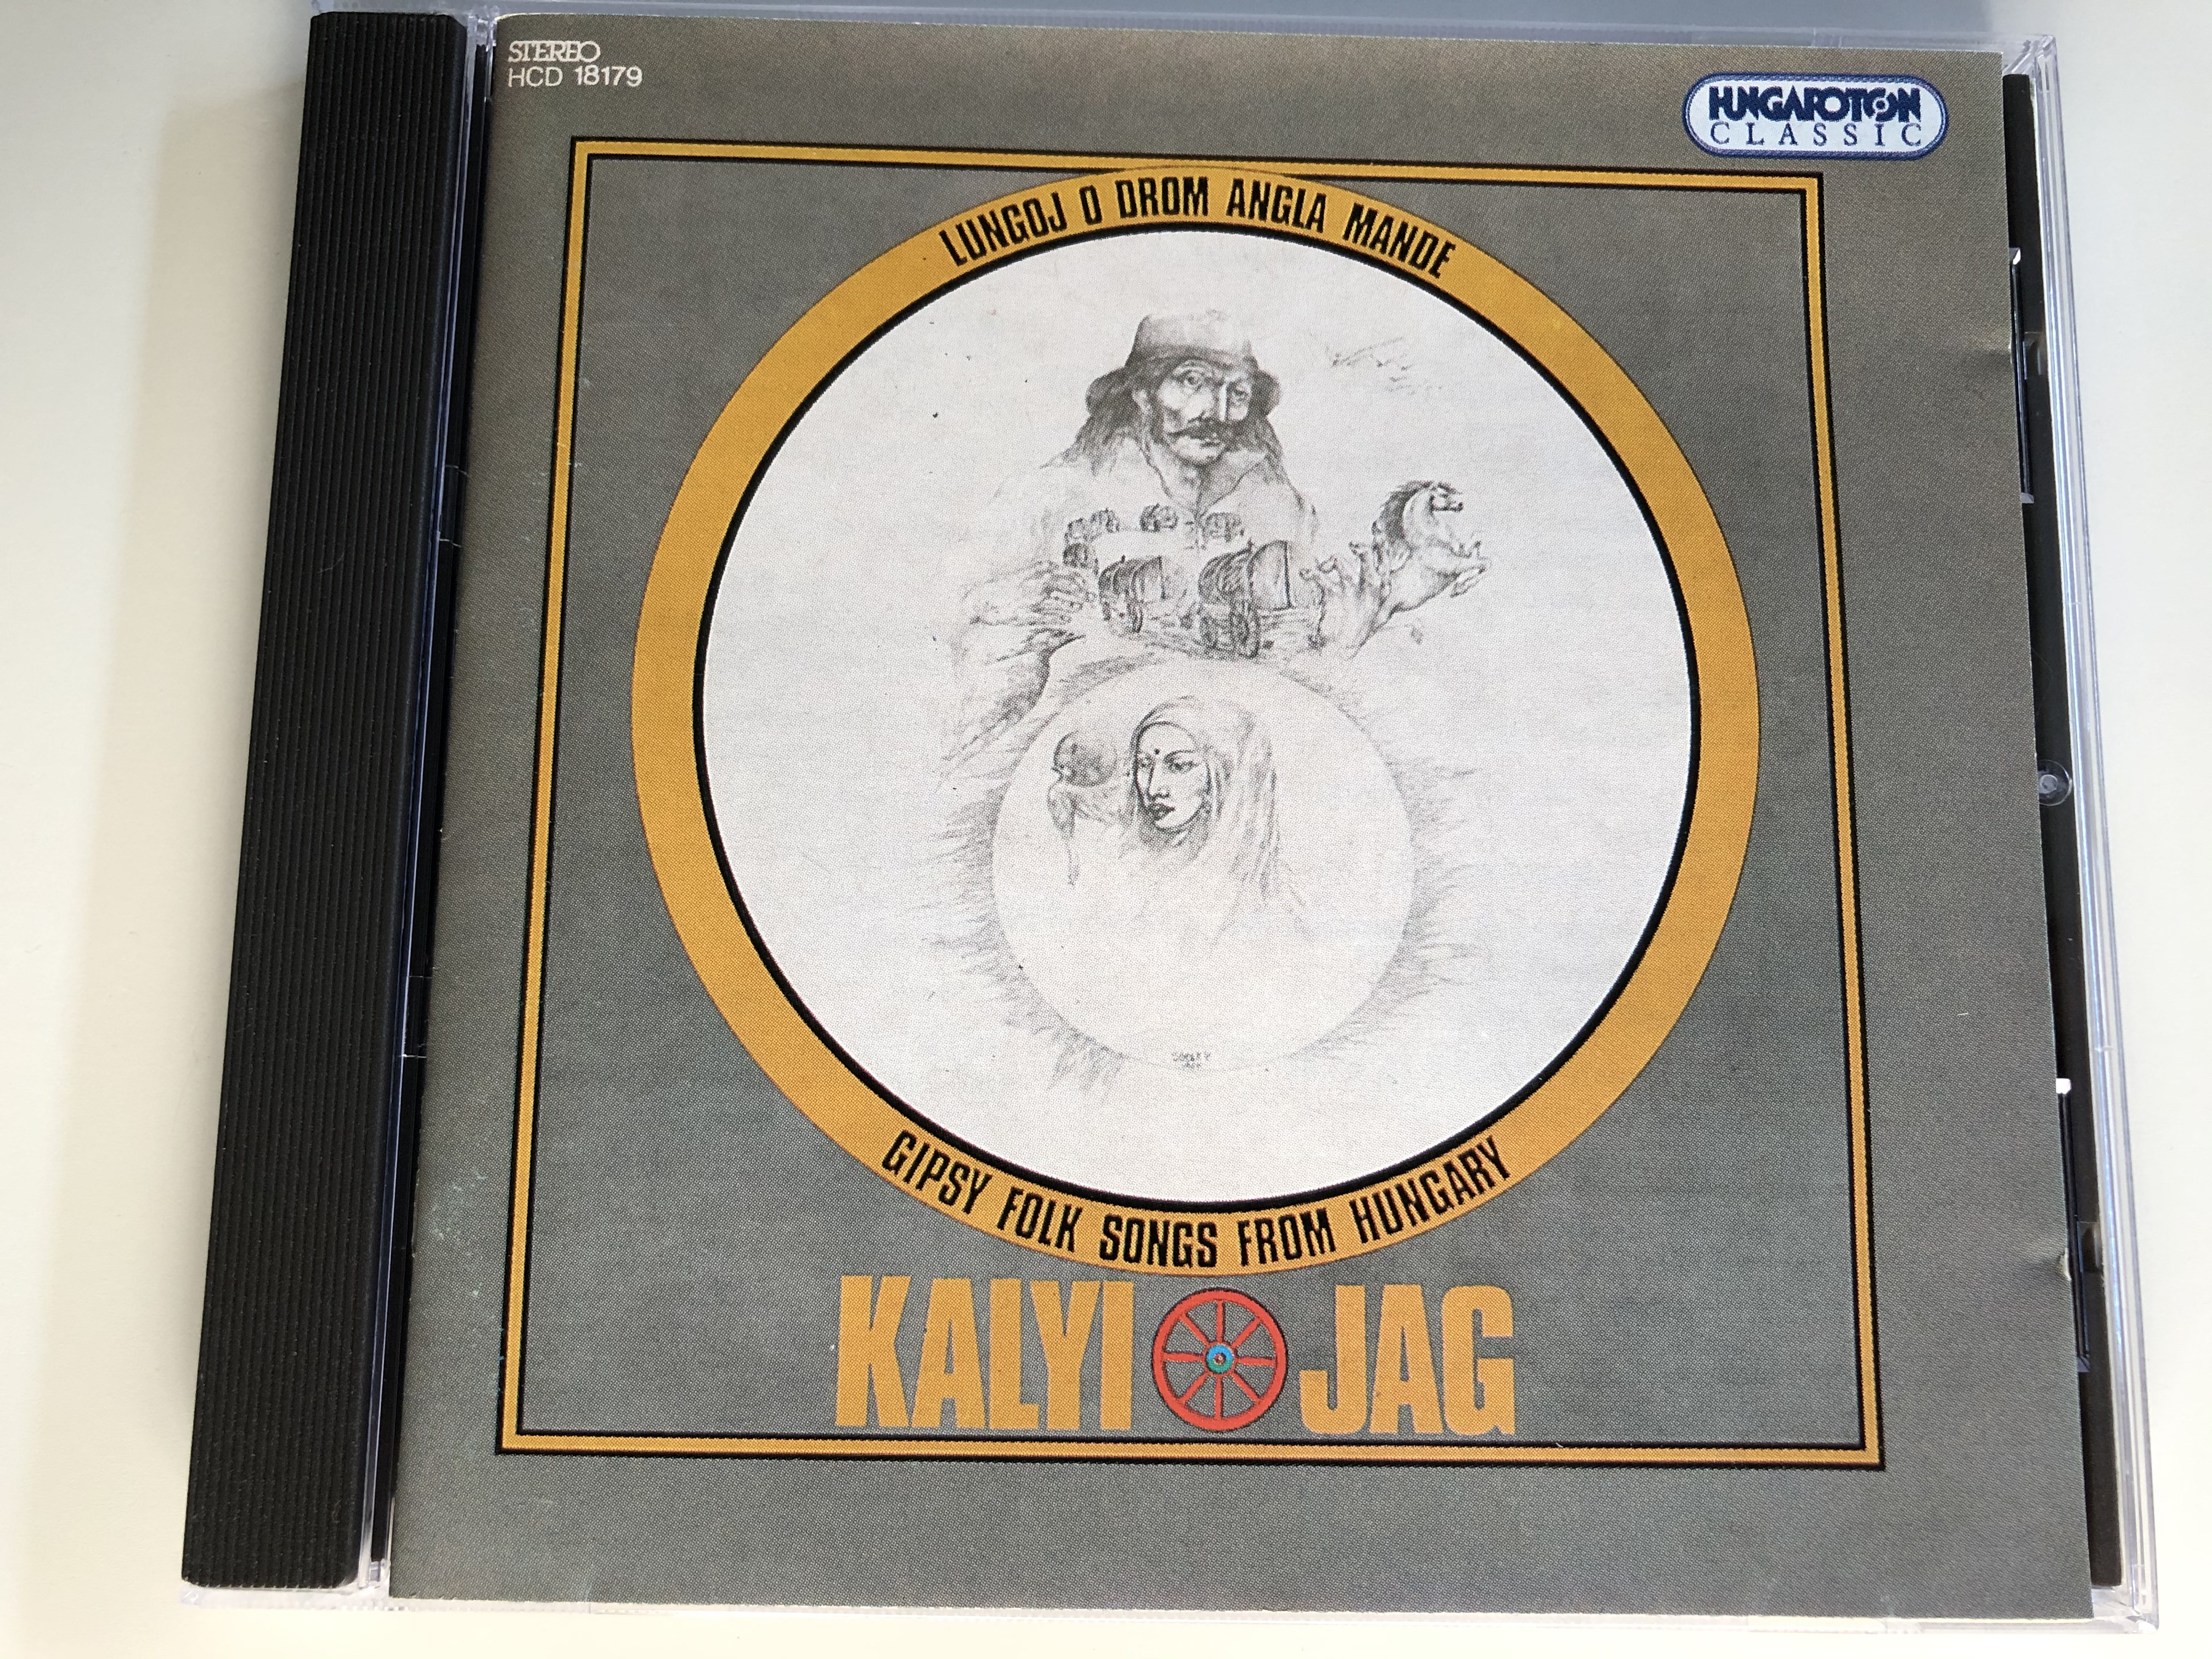 lungoj-o-drom-angla-mande-gipsy-folk-songs-from-hungary-kalyi-jag-hungaroton-classic-audio-cd-1995-stereo-hcd-18179-2-.jpg